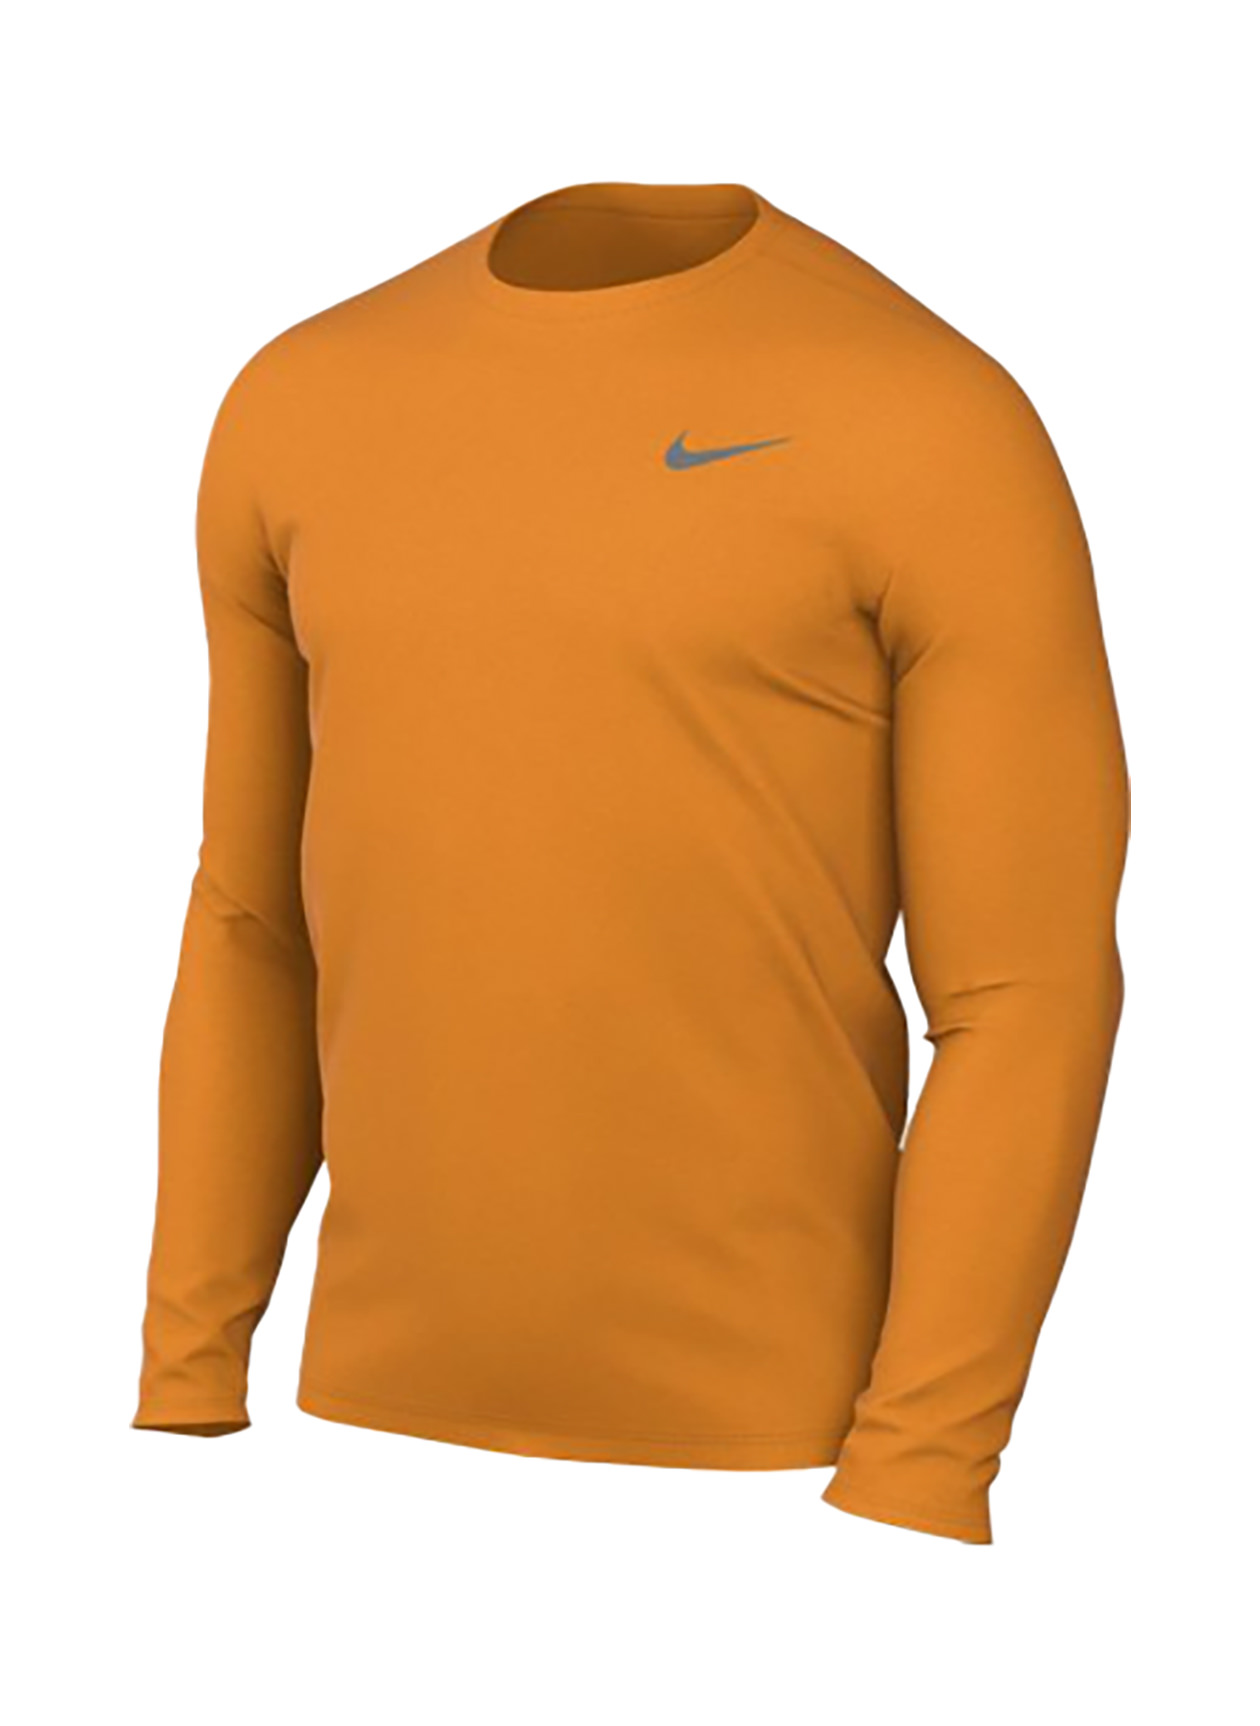 Nike Men's Bright Ceramic Legend Long-Sleeve Crew T-Shirt